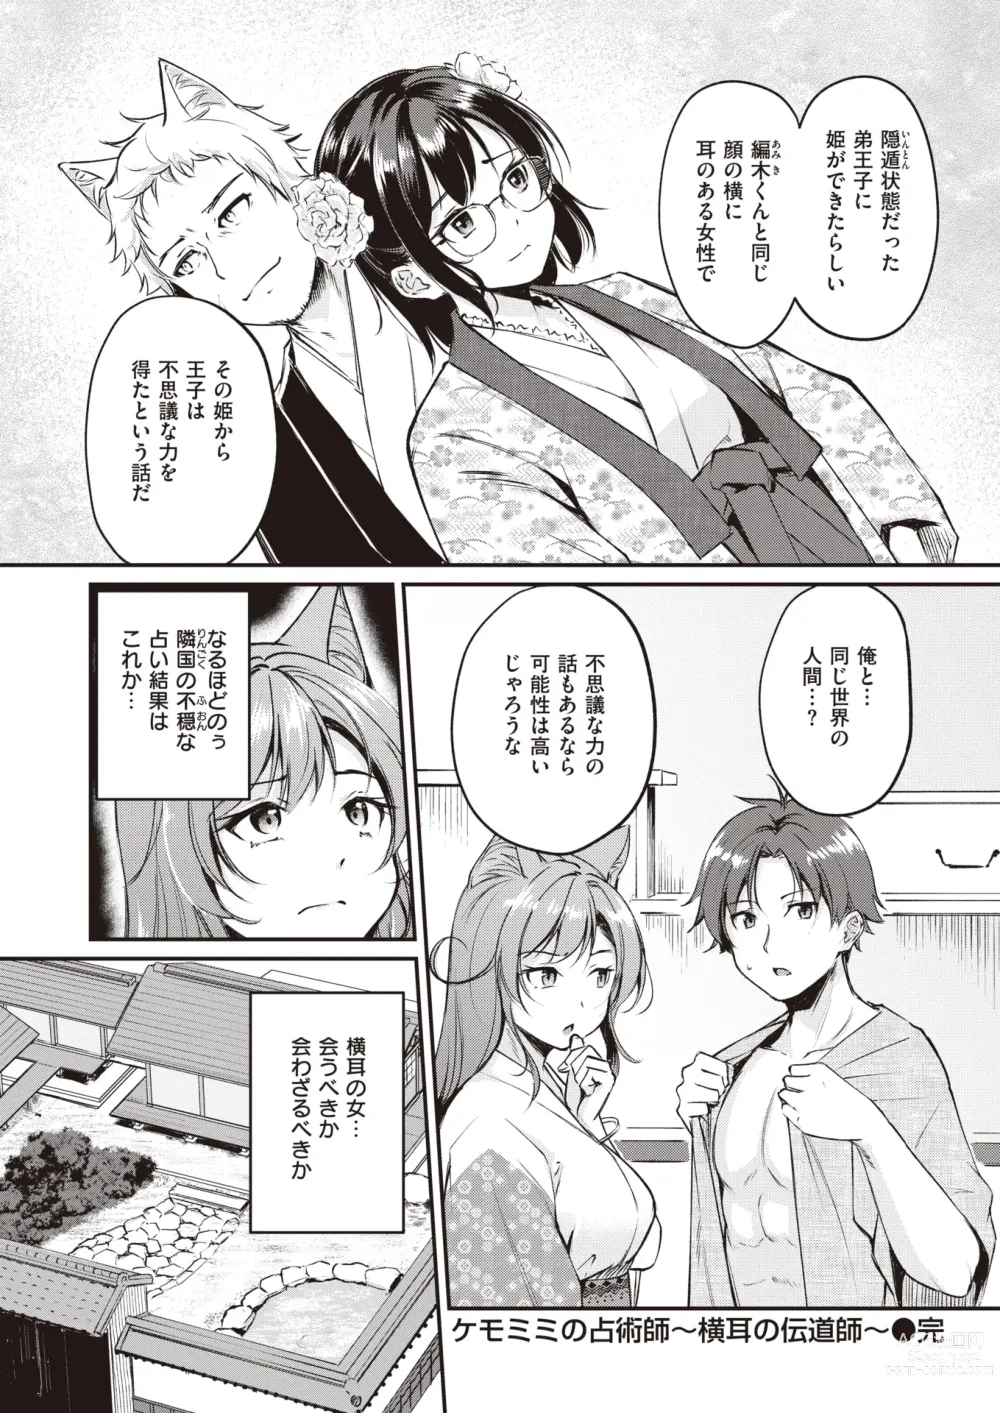 Page 51 of manga Isekai Rakuten Vol. 23